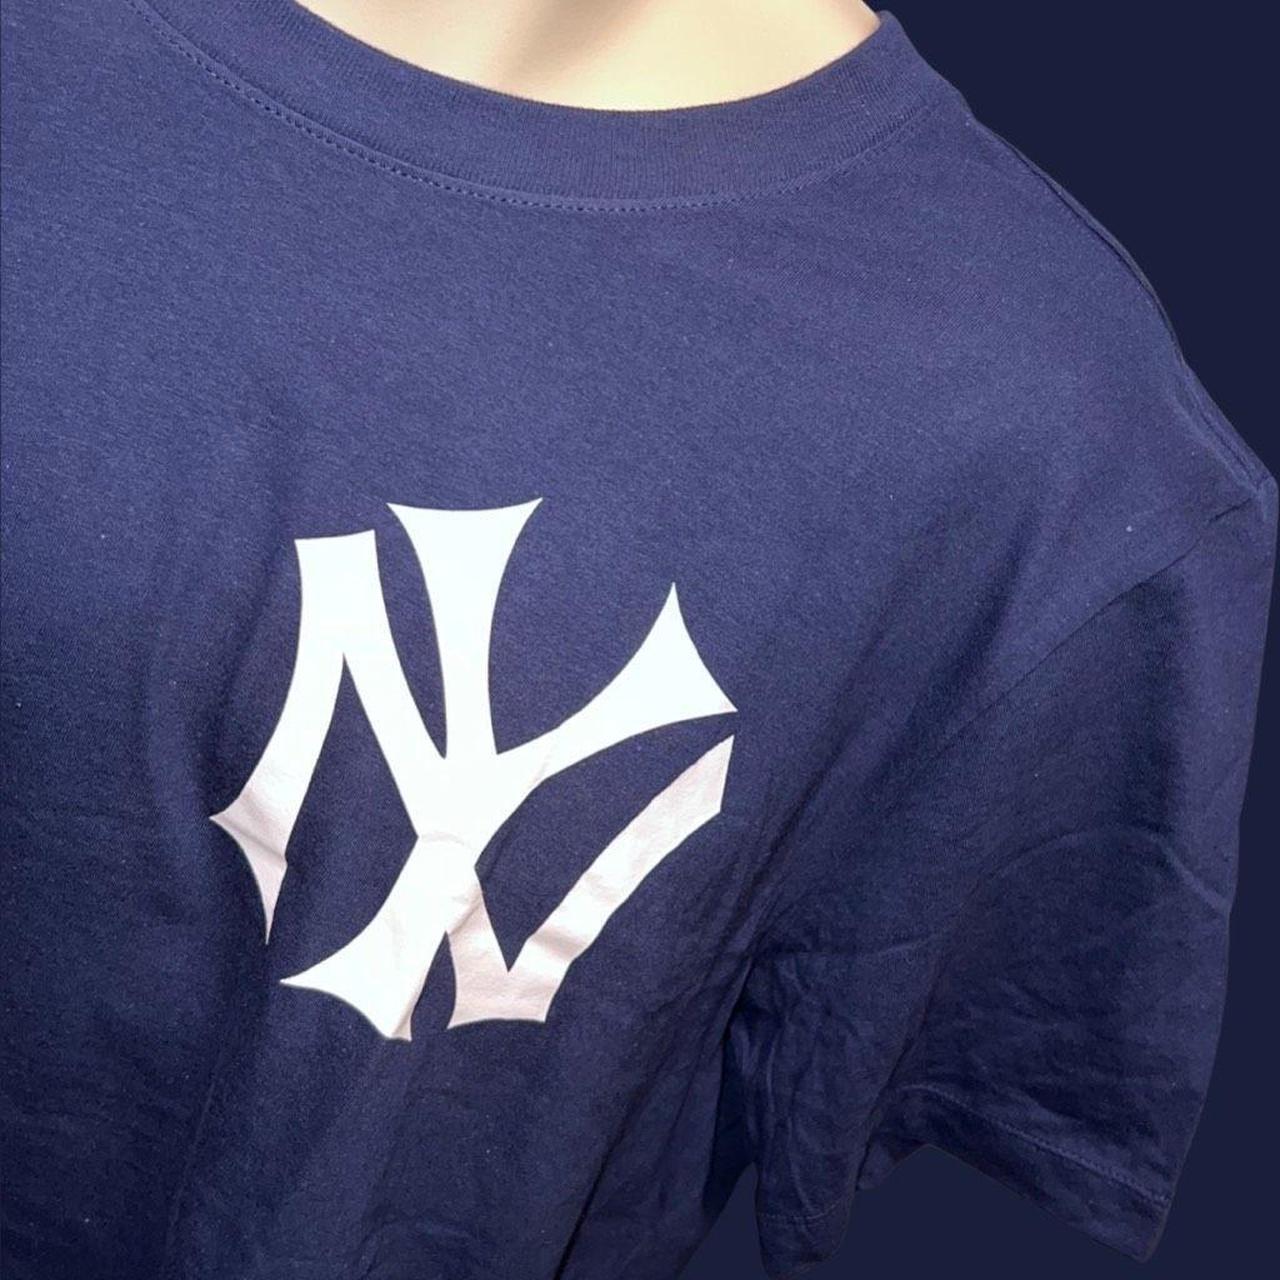 Nike Men's New York Yankees White Cooperstown Long Sleeve T-Shirt